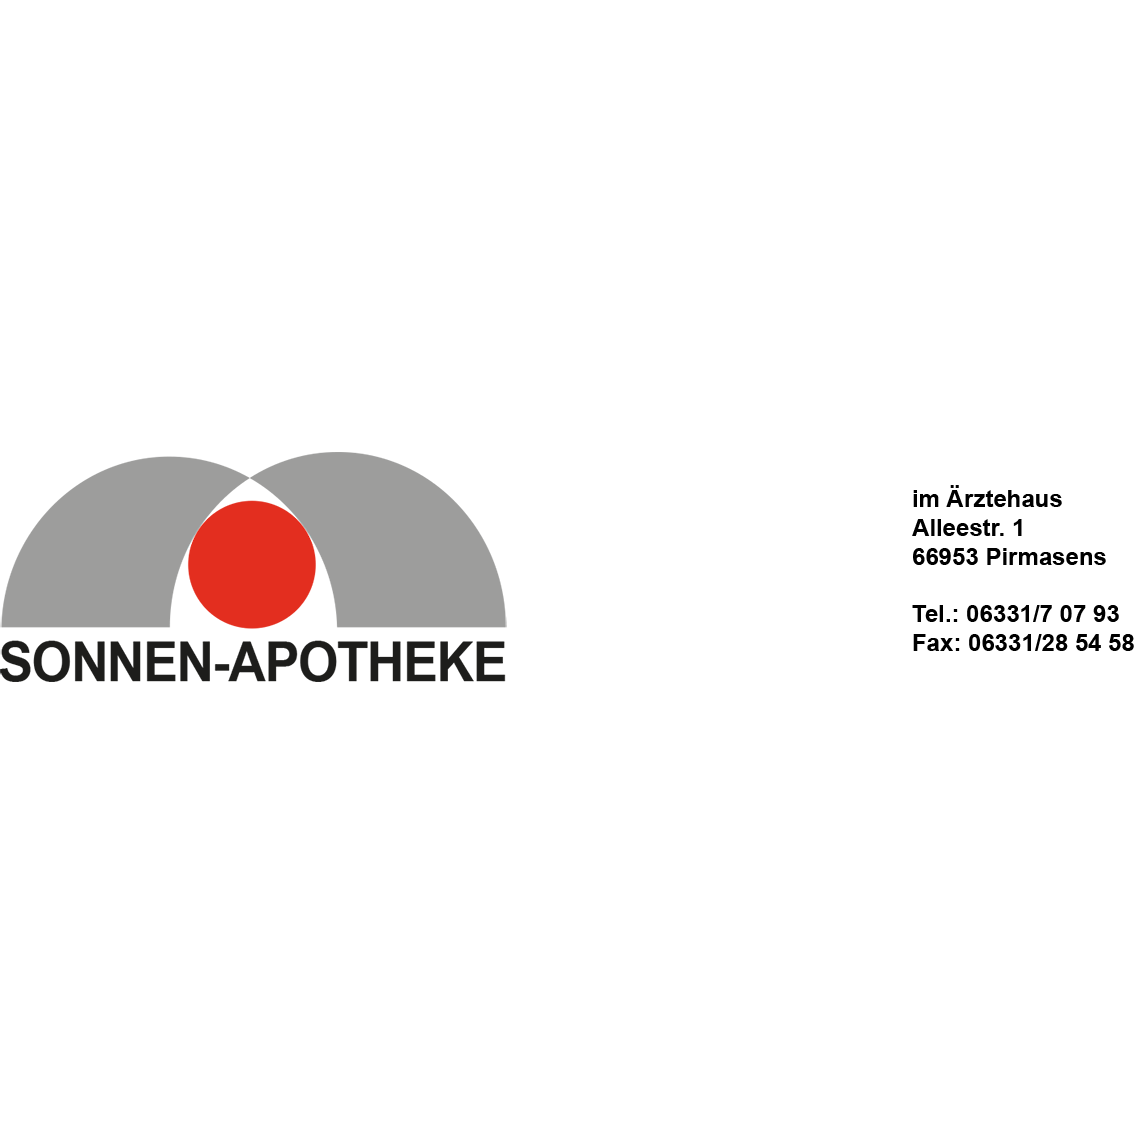 Sonnen-Apotheke in Pirmasens - Logo